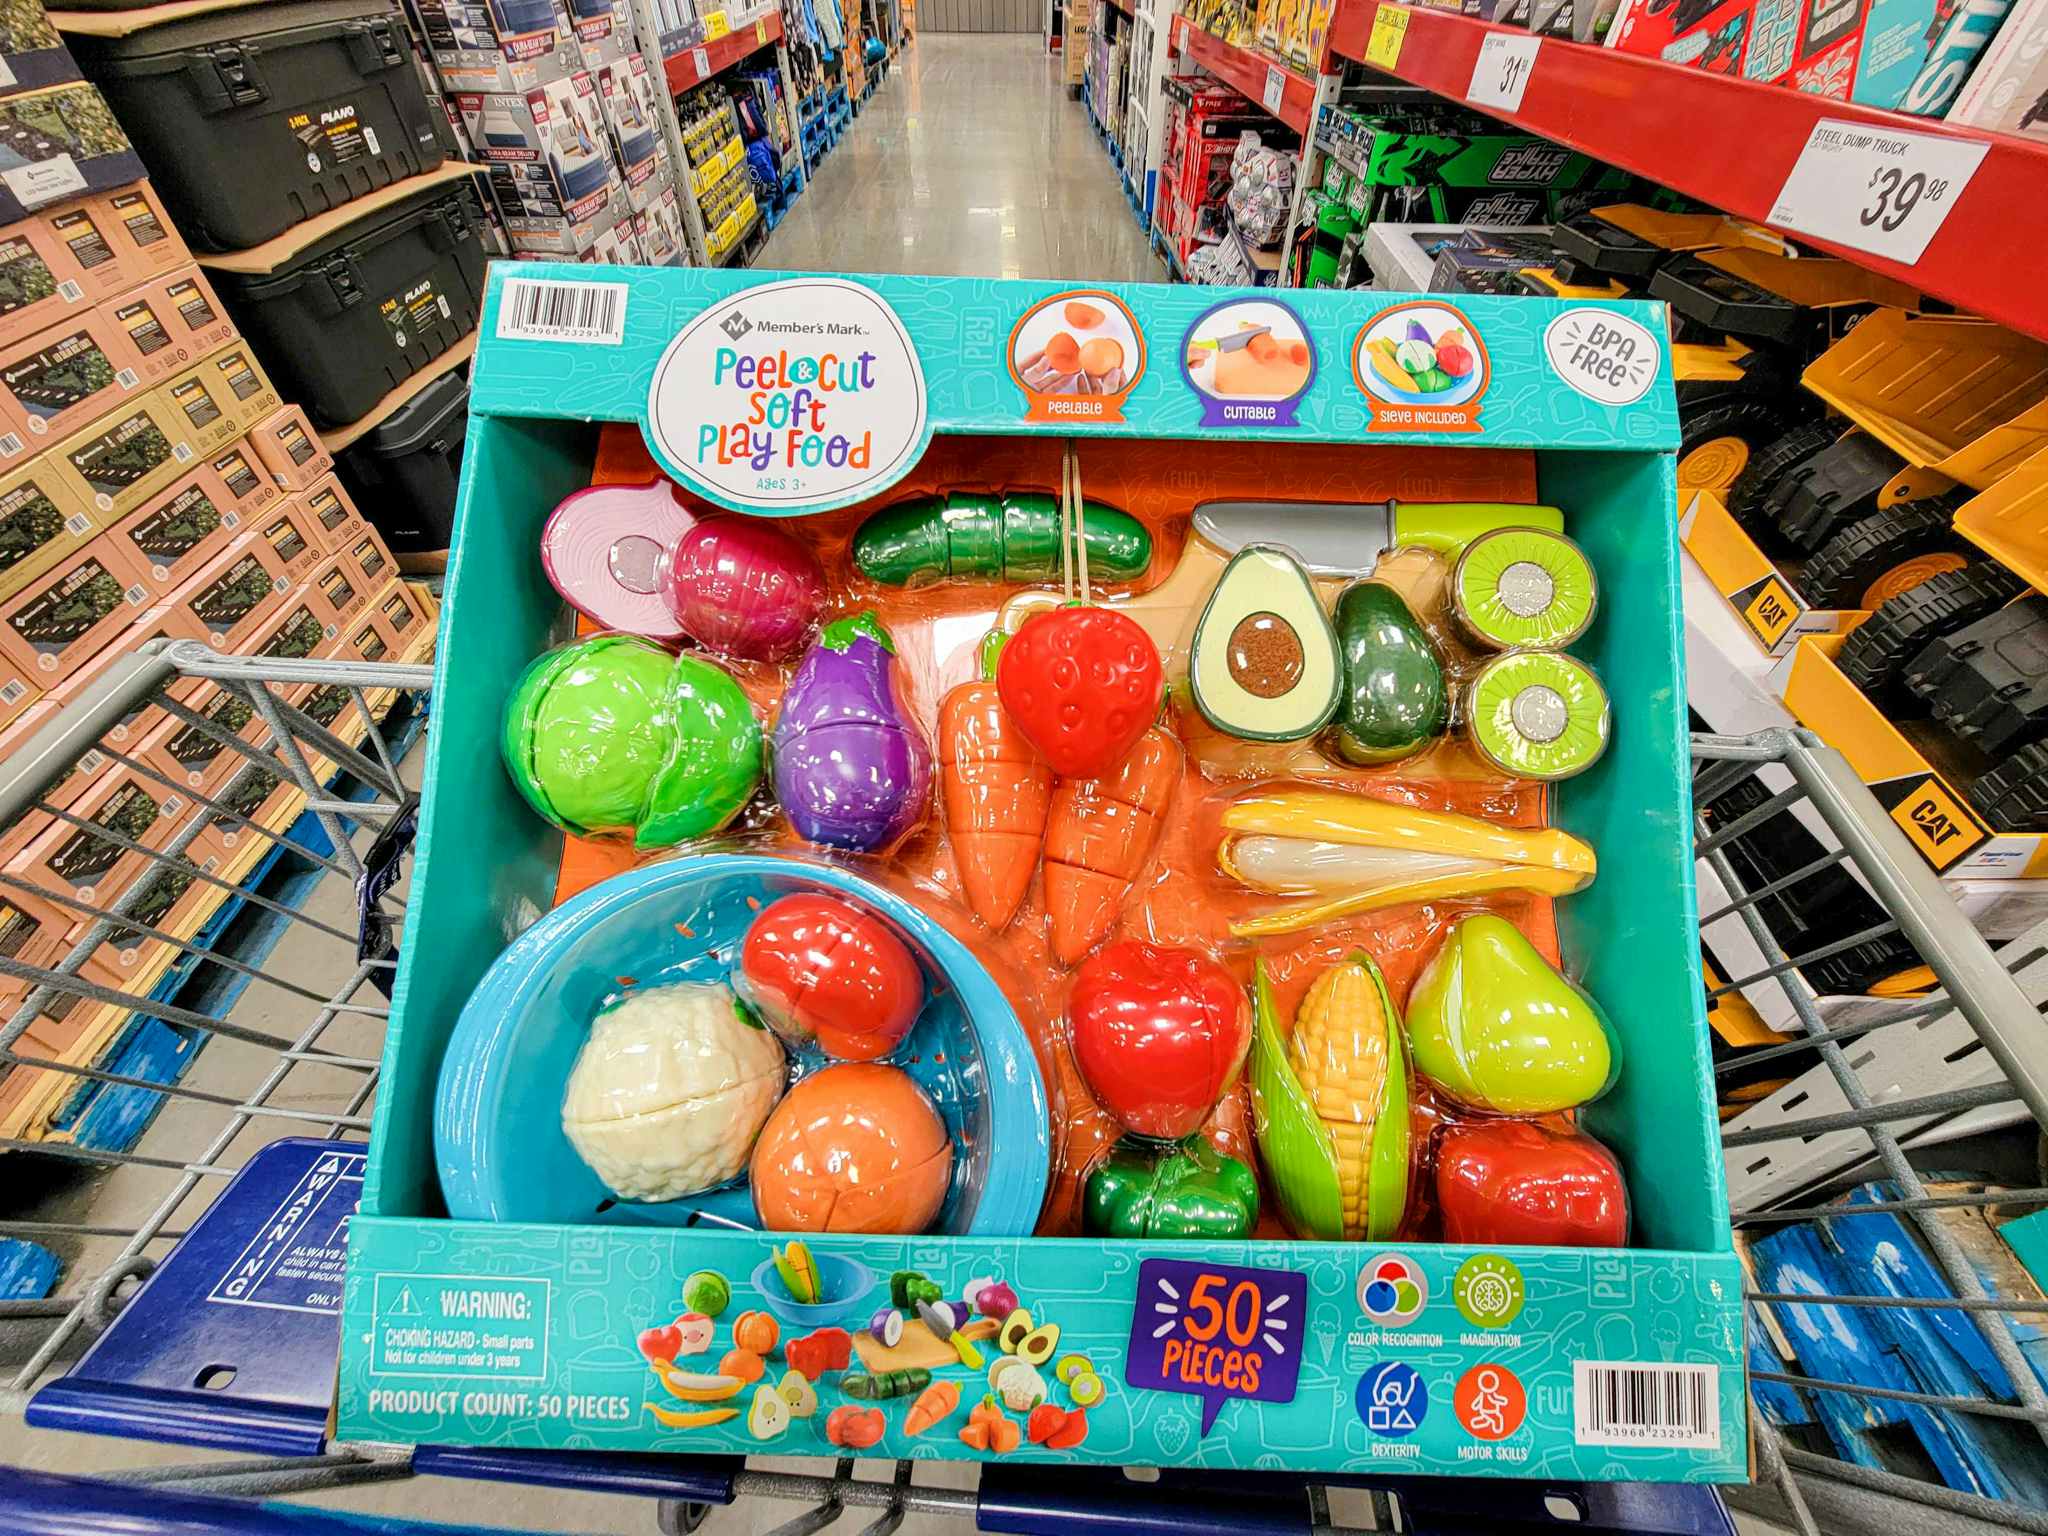 peel & cut soft play food set in a cart